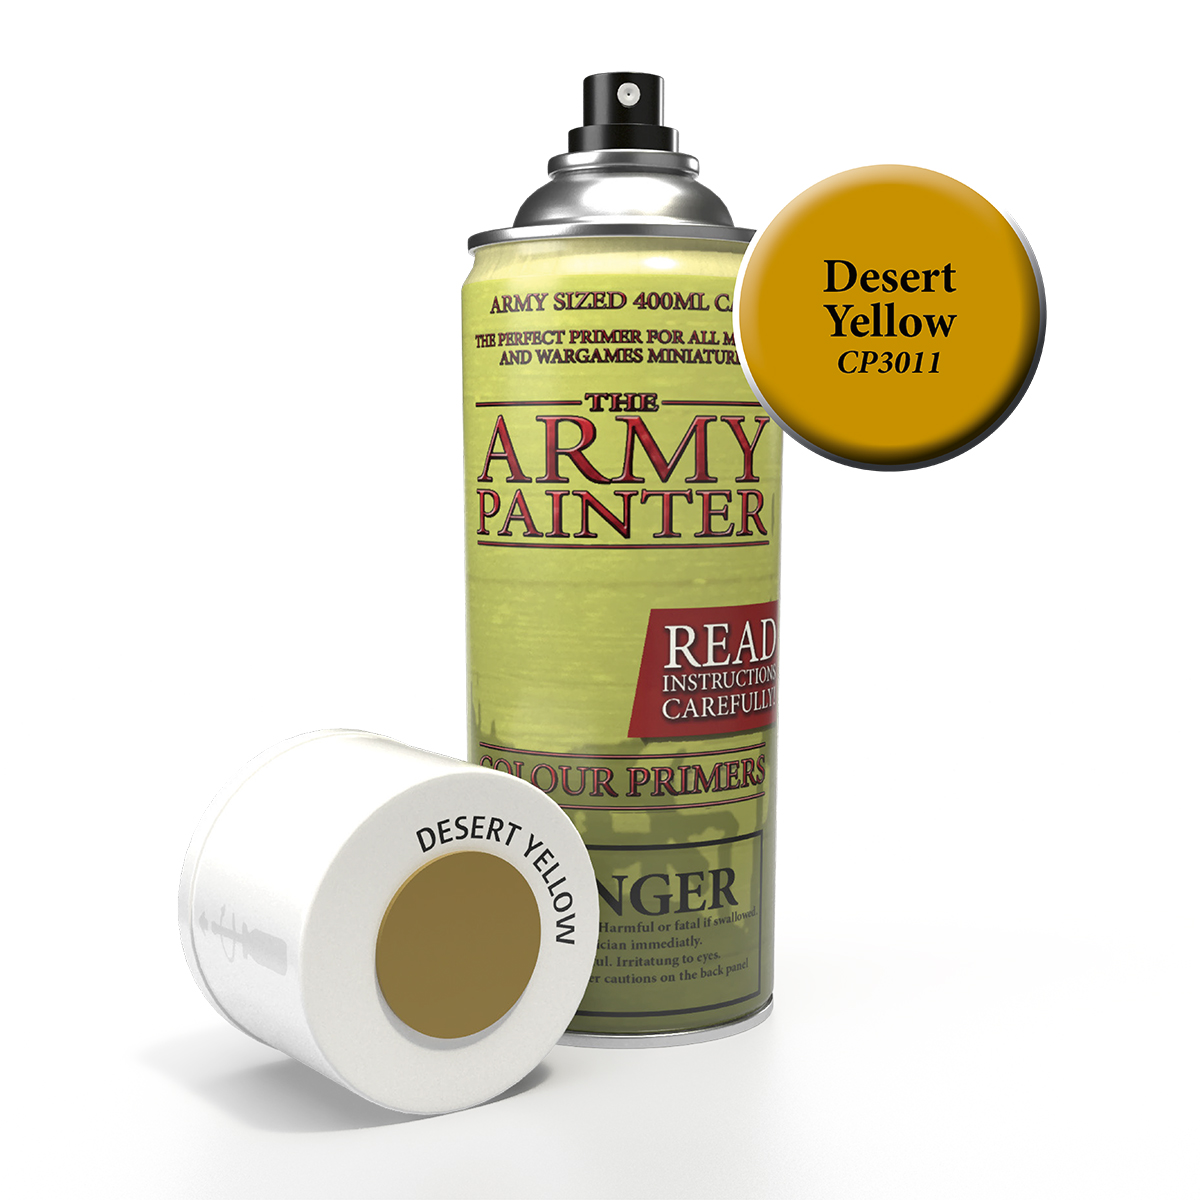 Army Painter Colorspray Desert Yellow